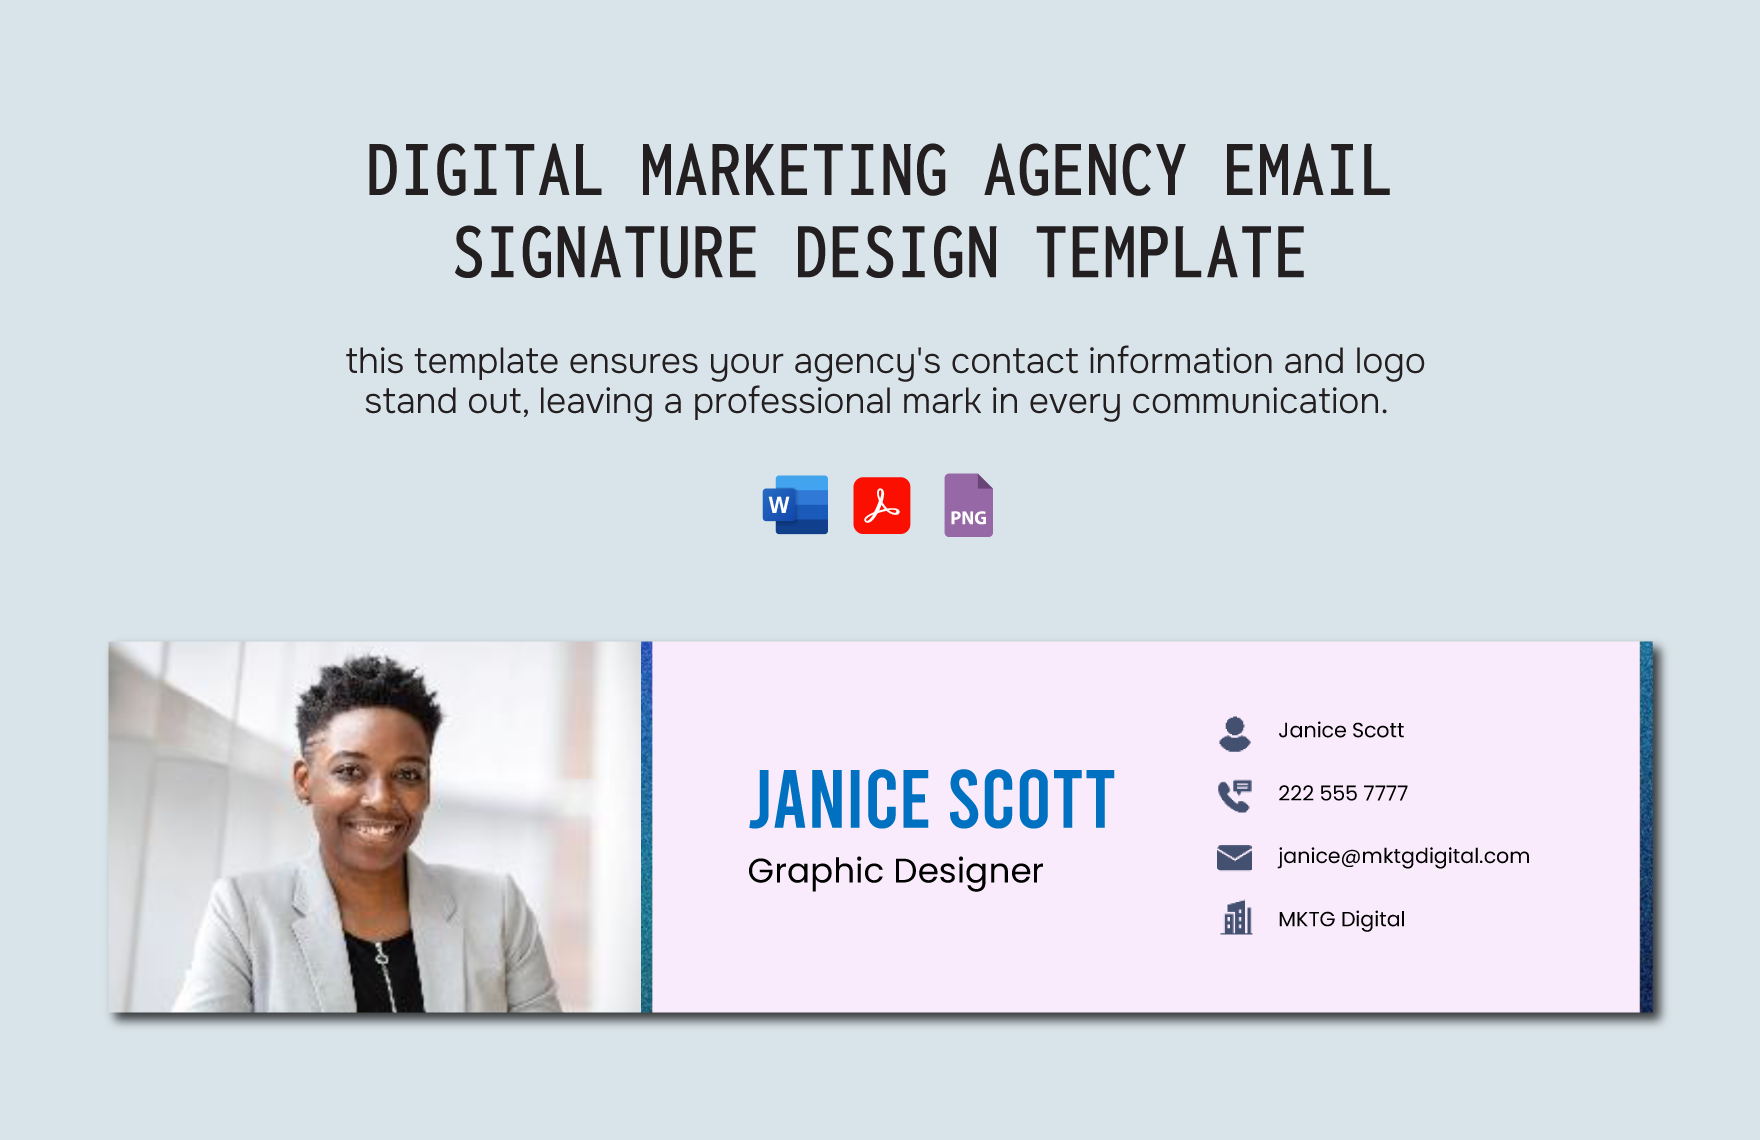 Digital Marketing Agency Email Signature Design Template